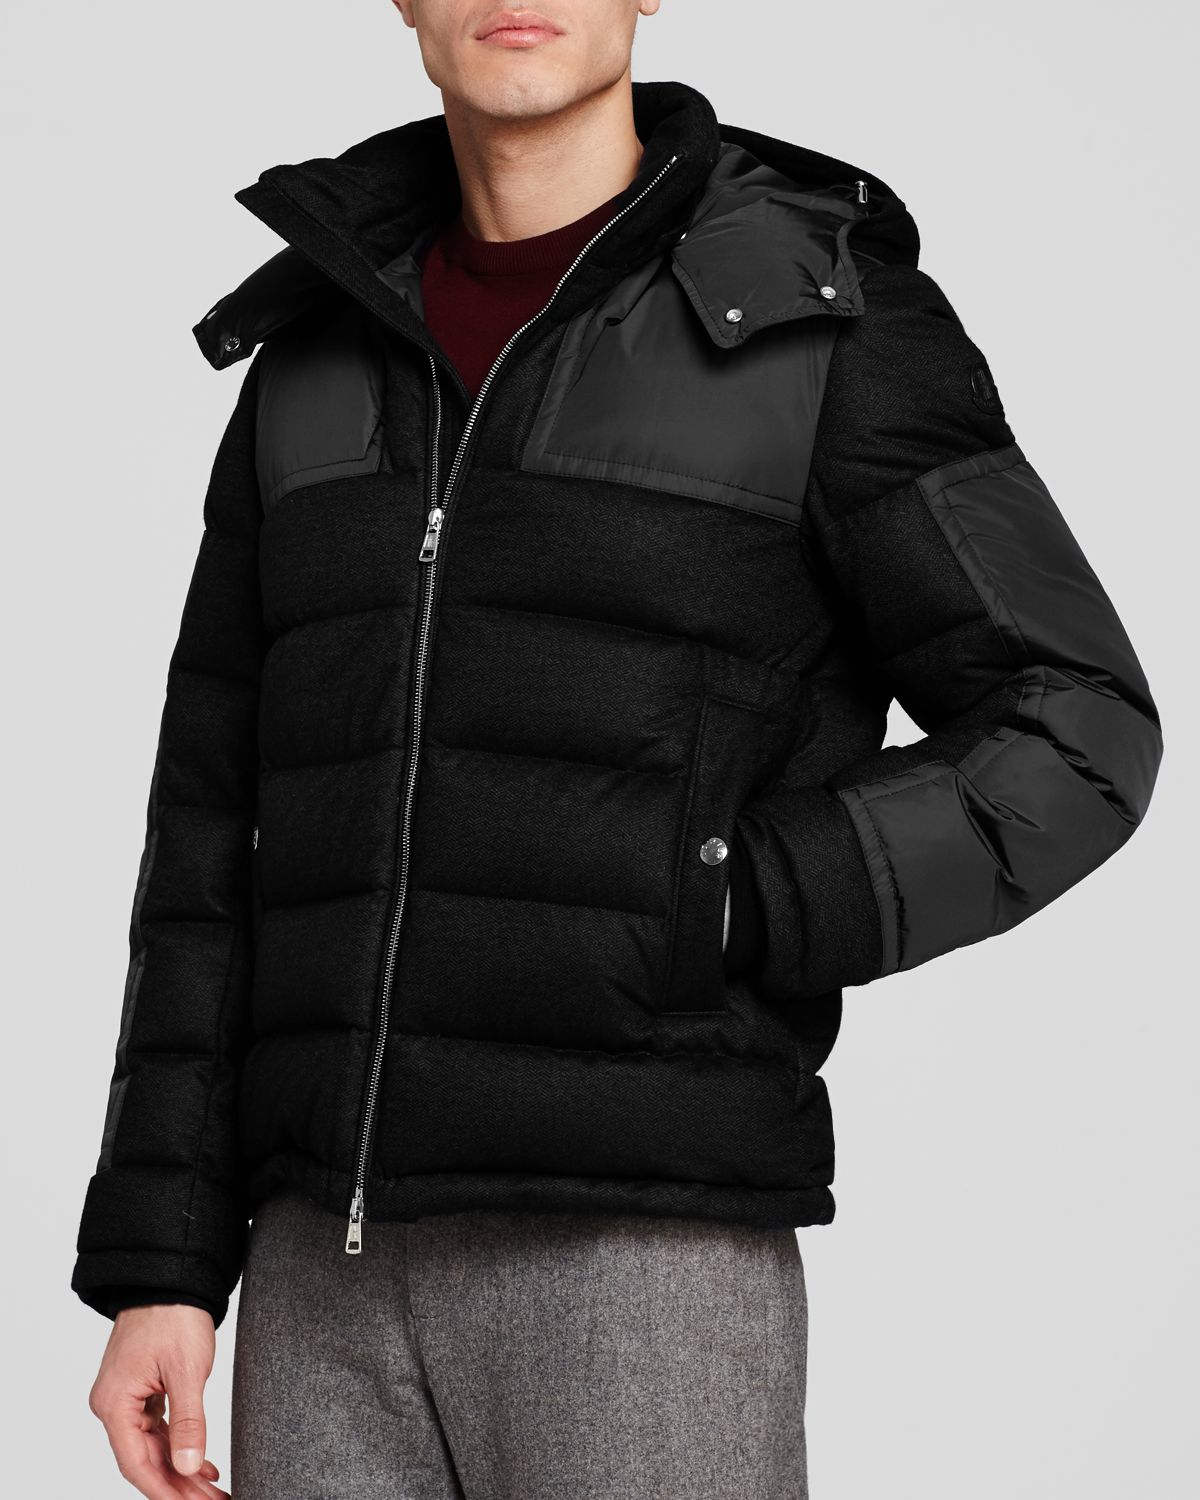 Moncler Severac Wool Blend Puffer Jacket in Black for Men - Lyst